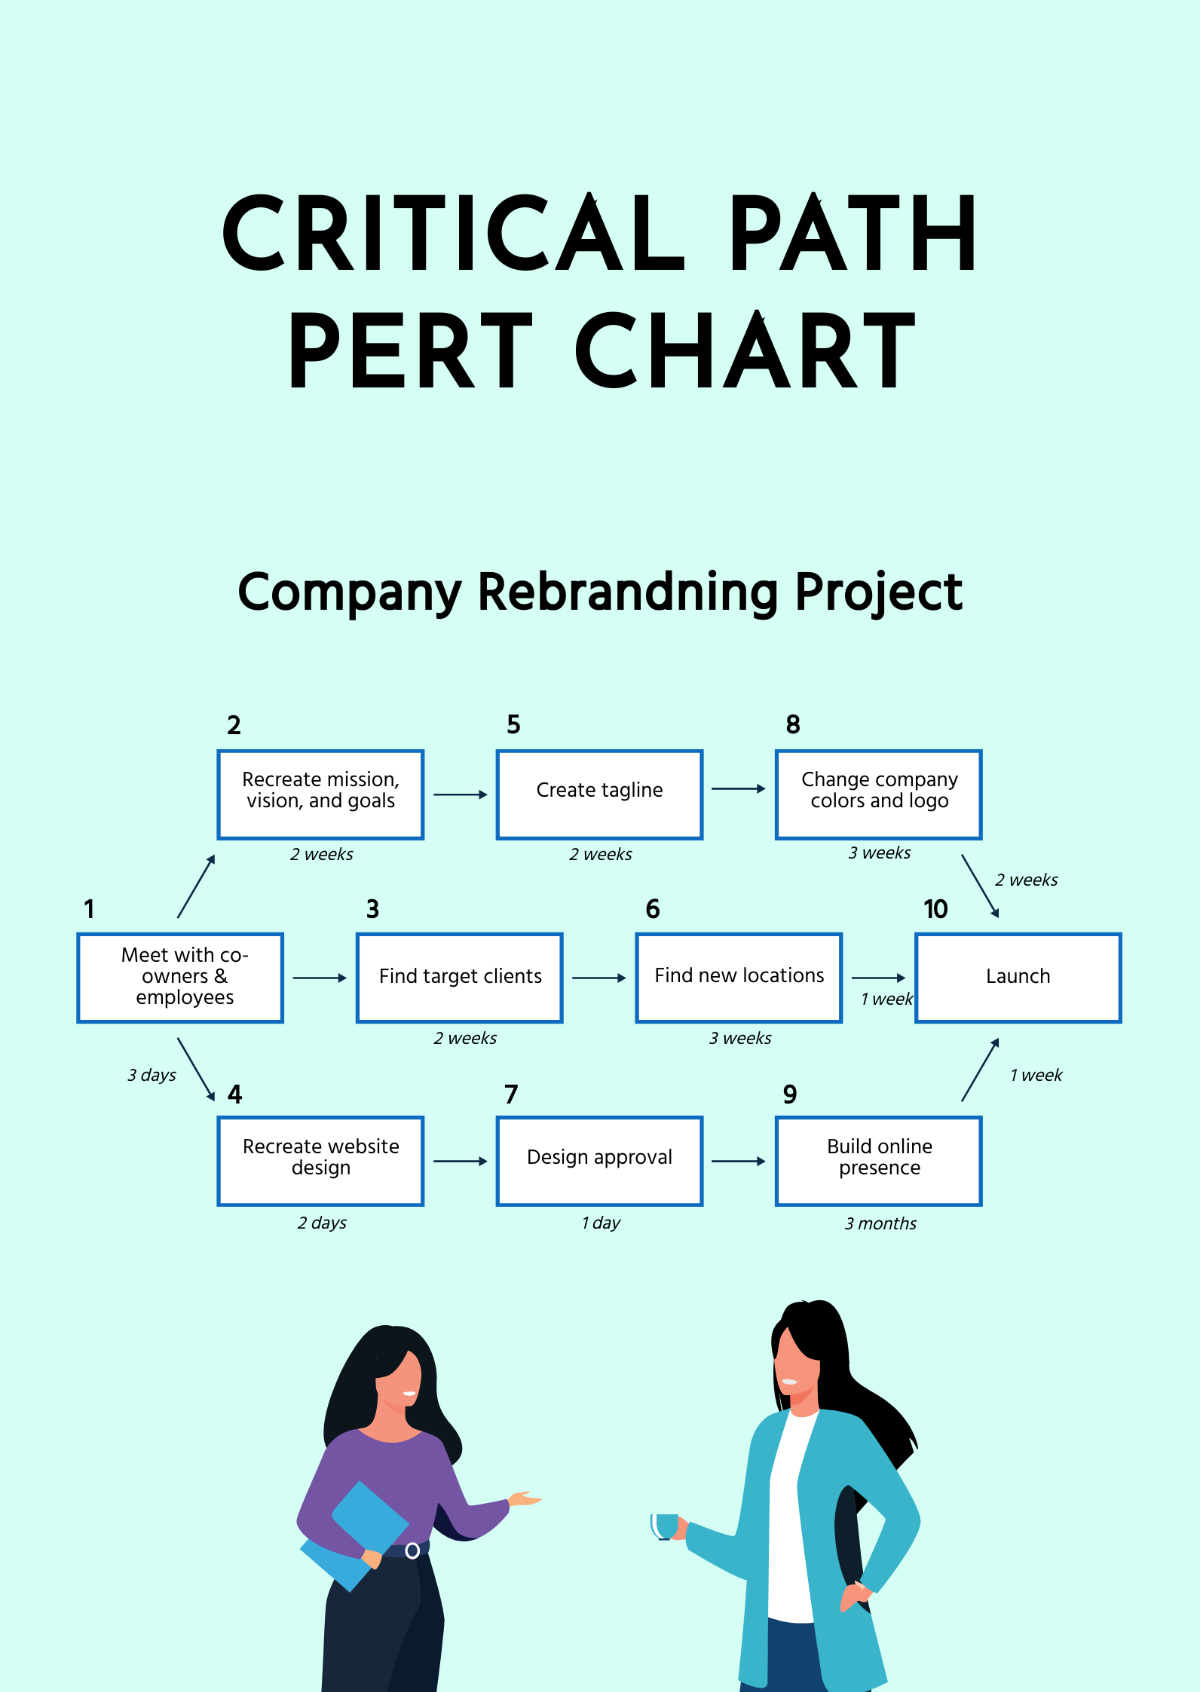 Critical Path PERT Chart